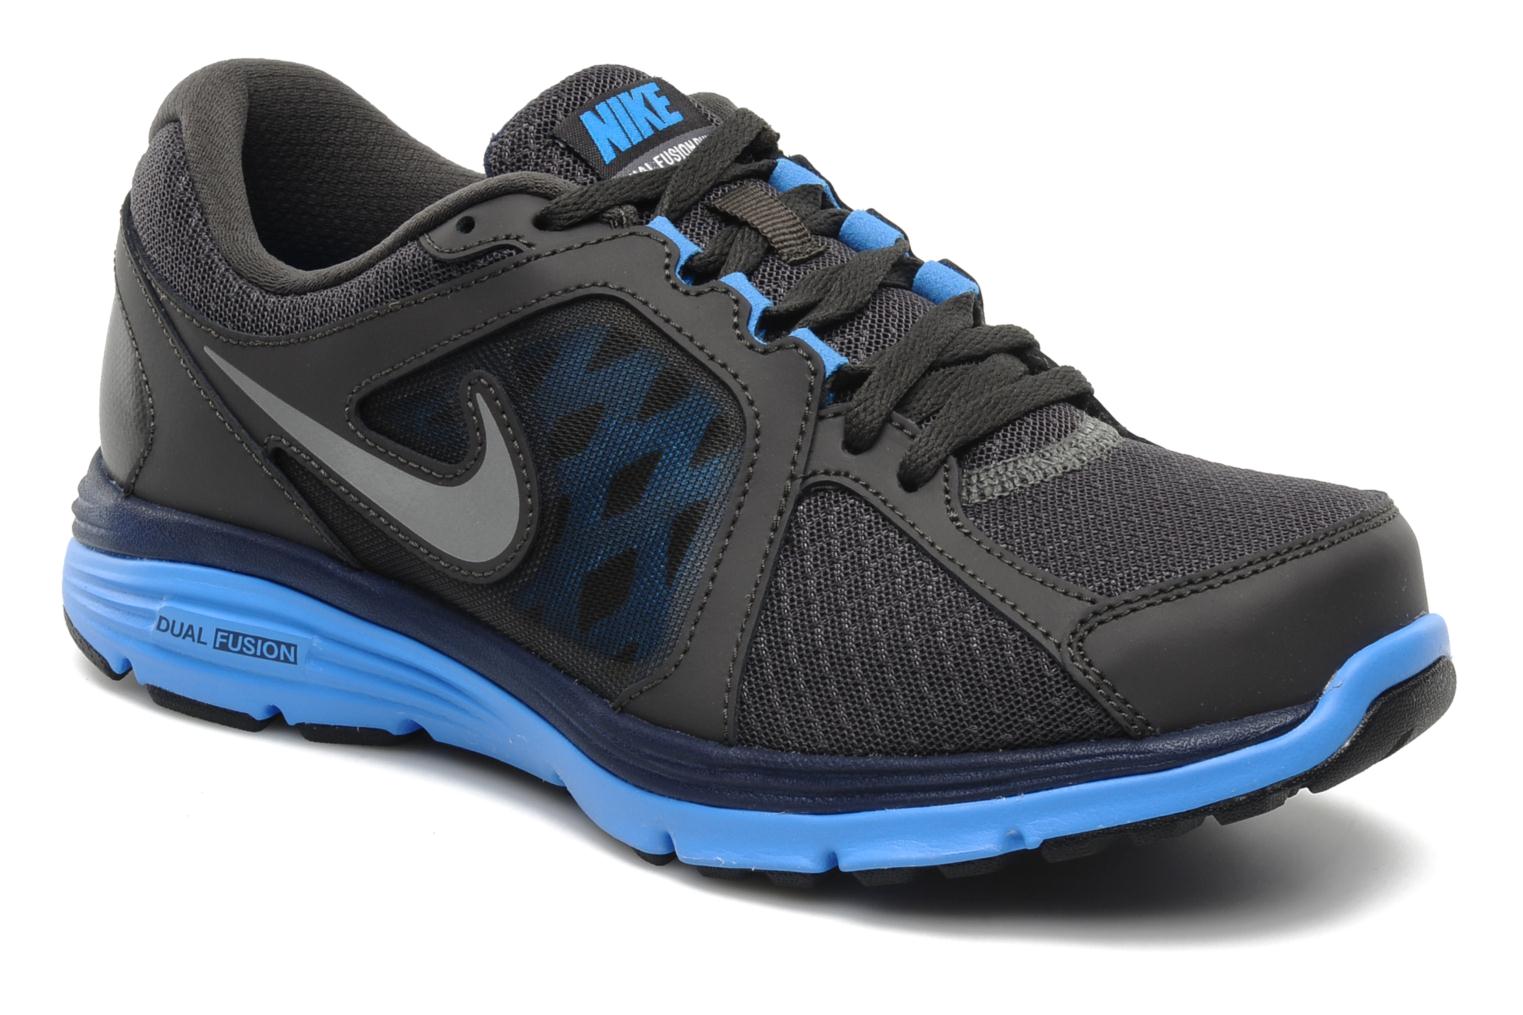 Nike Nike Dual Fusion Run Sport shoes in Grey at Sarenza.co.uk (113212)